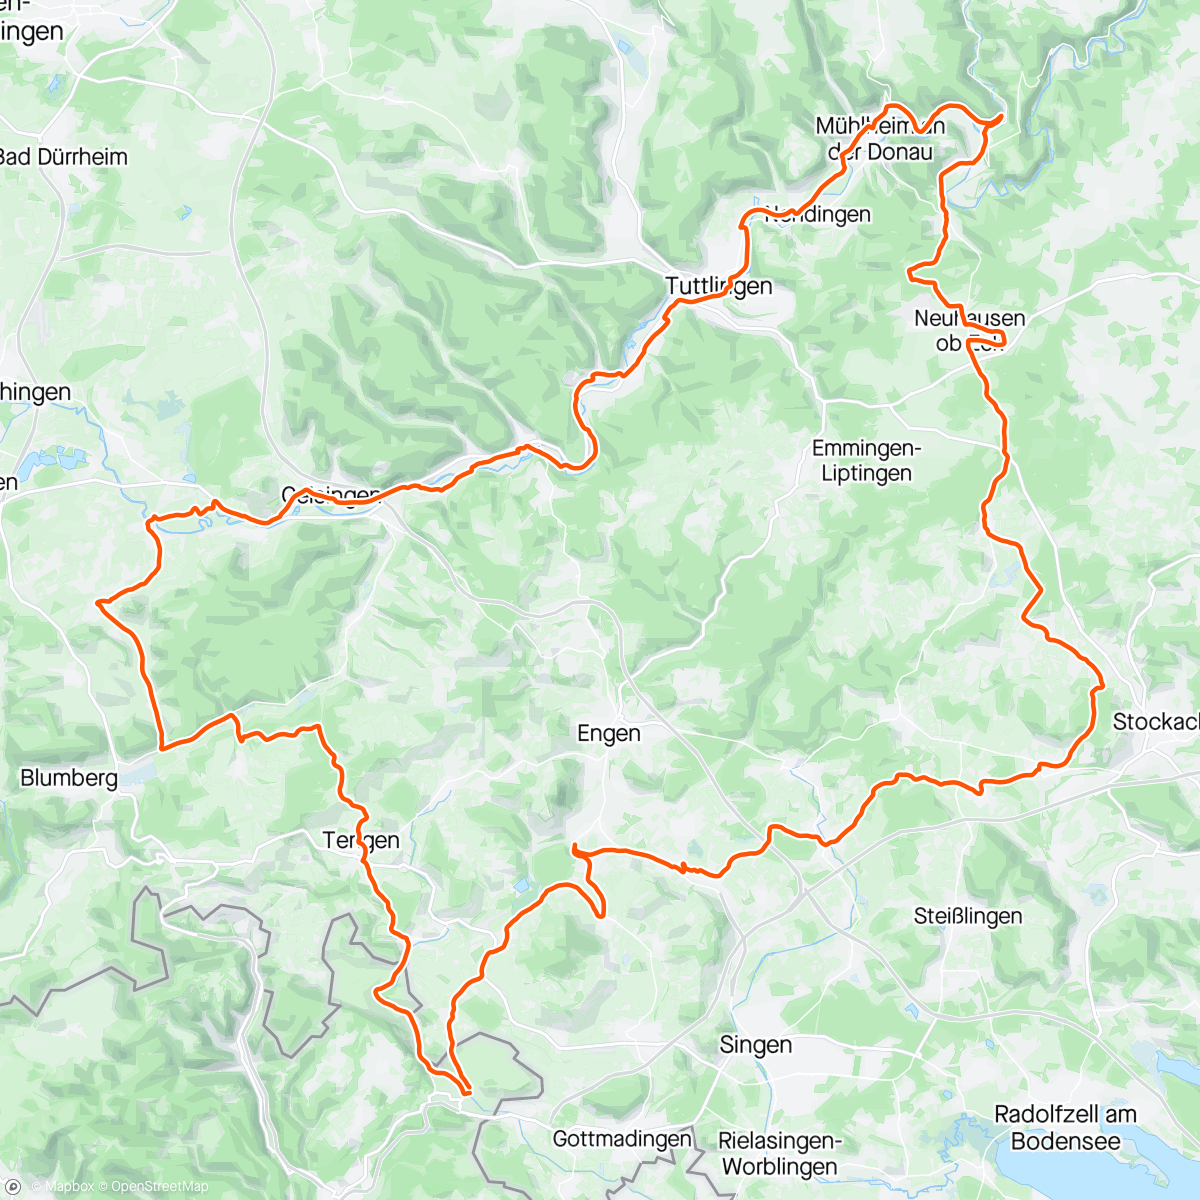 Map of the activity, Radfahrt am Mittag